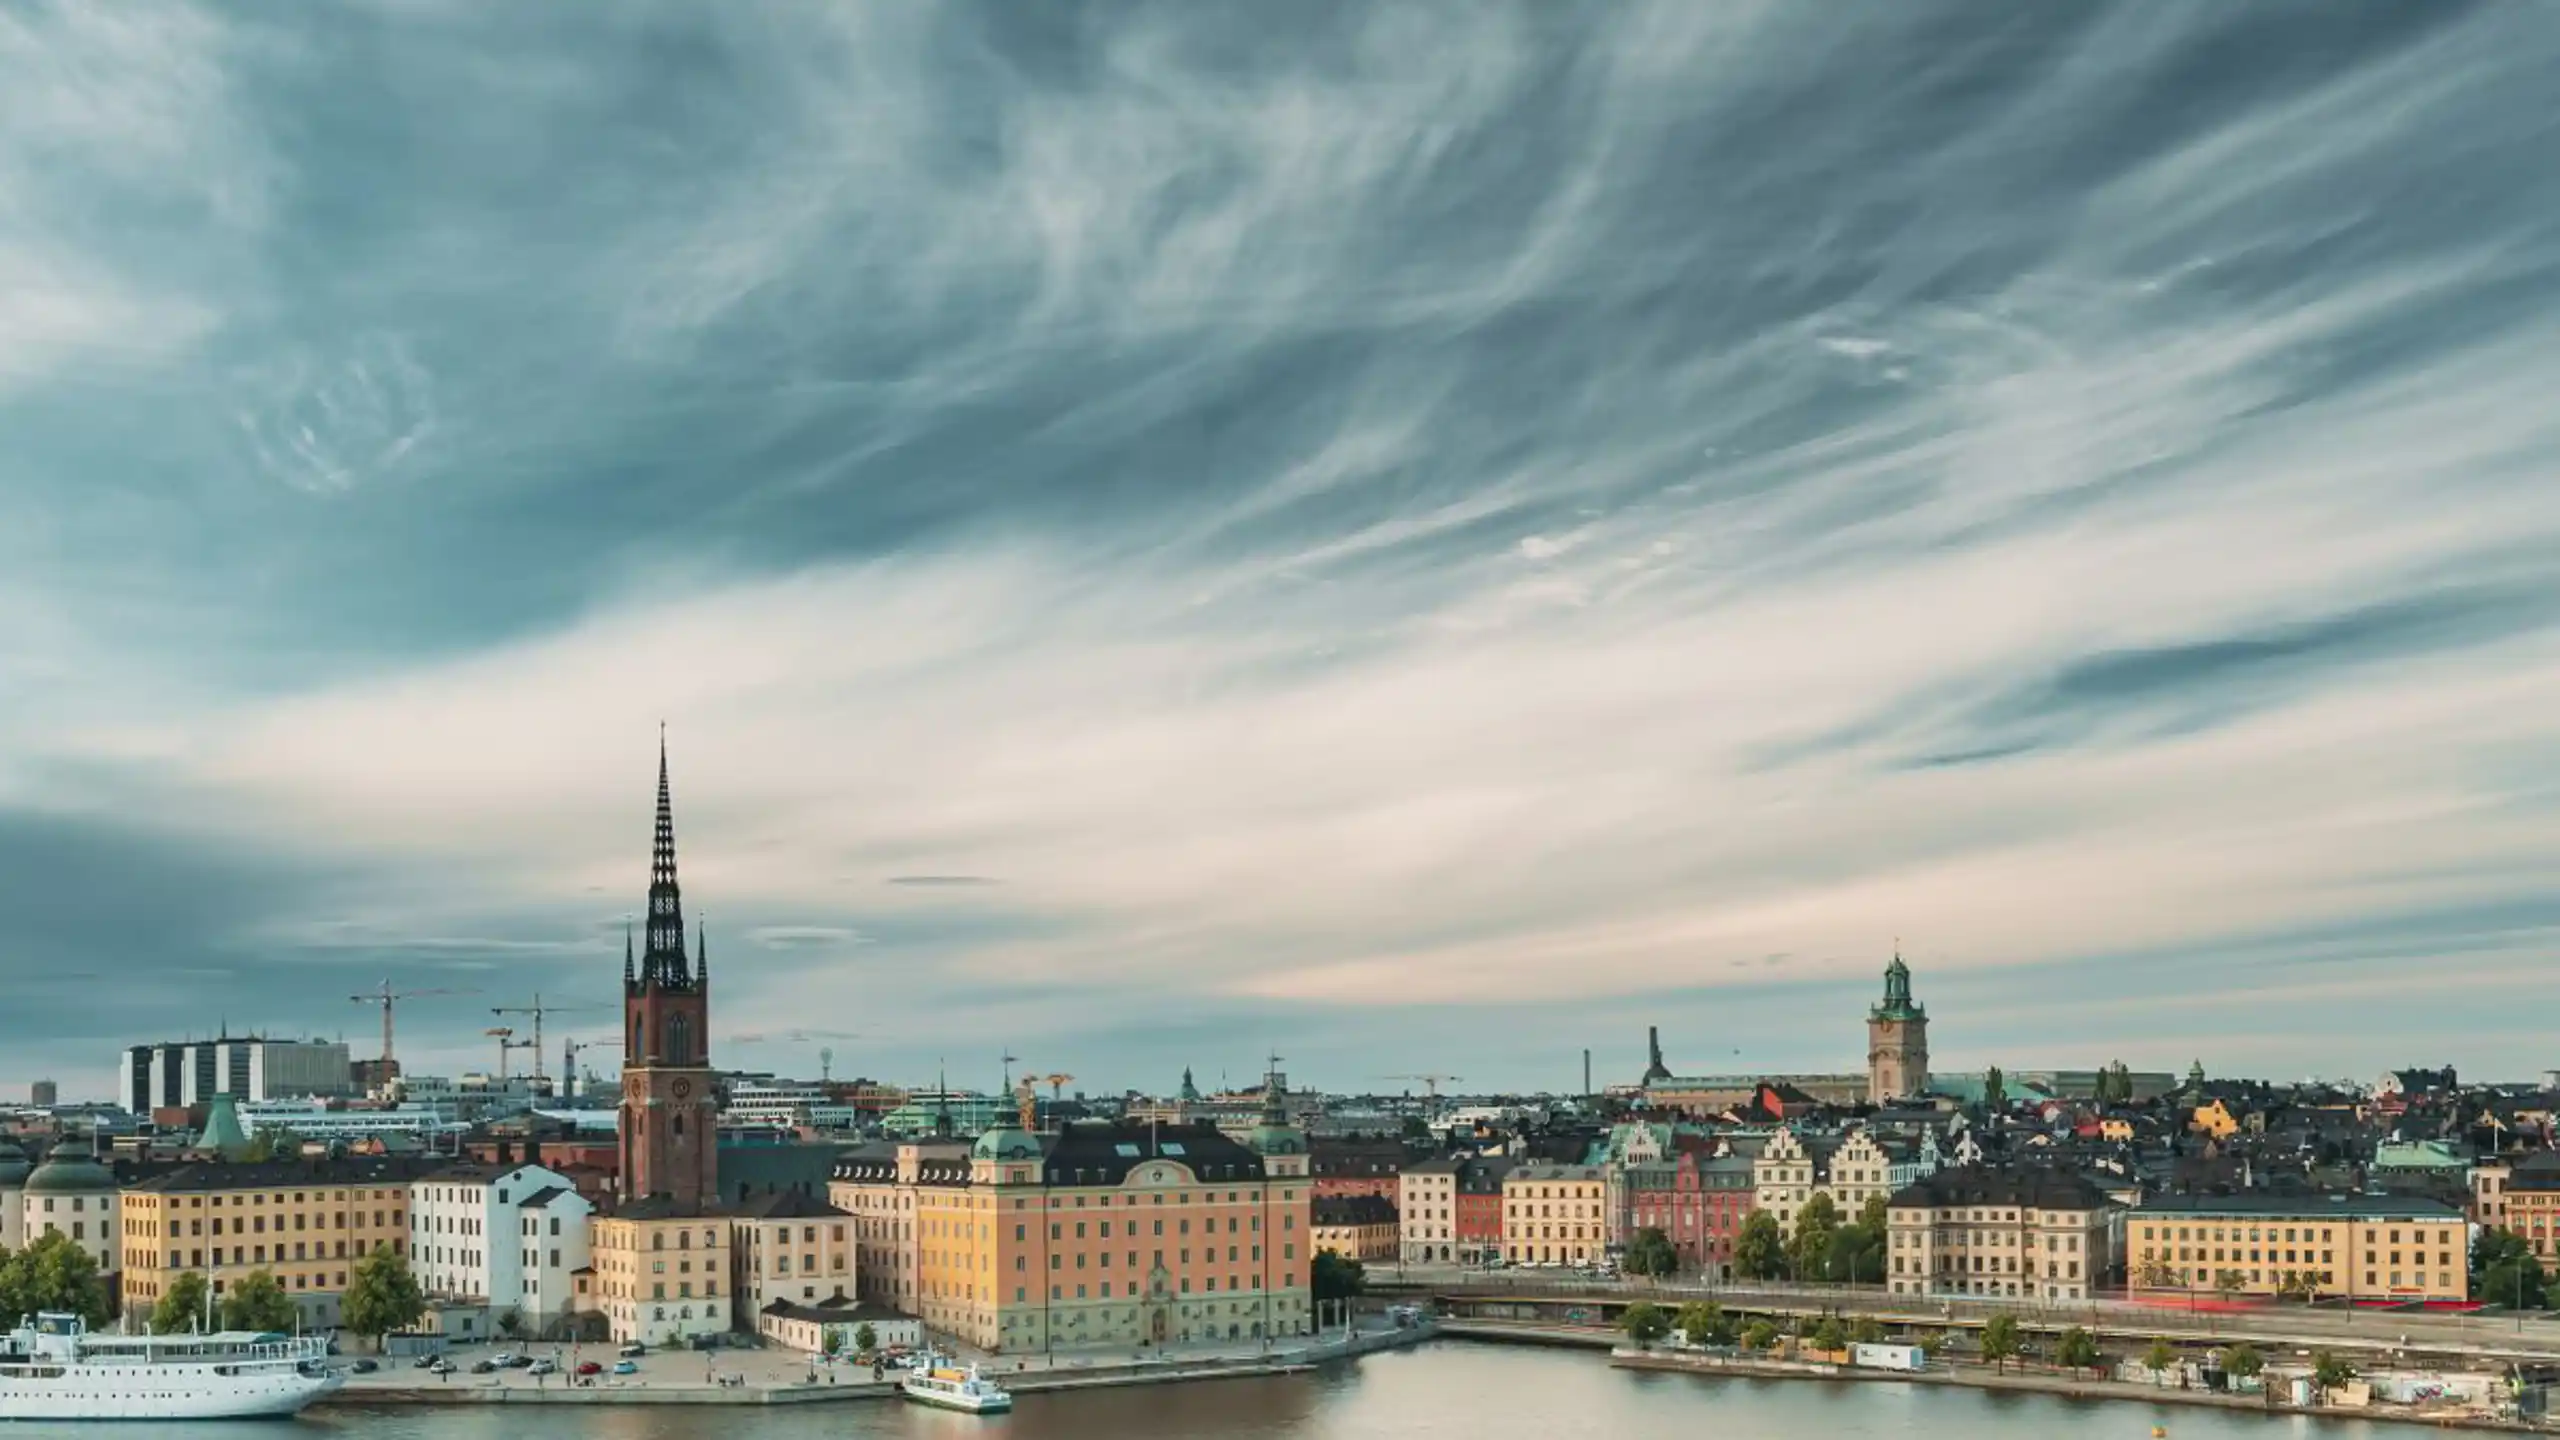 Stockholm Sweden Scenic Famous View Of Embankmen 2023 11 27 04 58 48 Utc